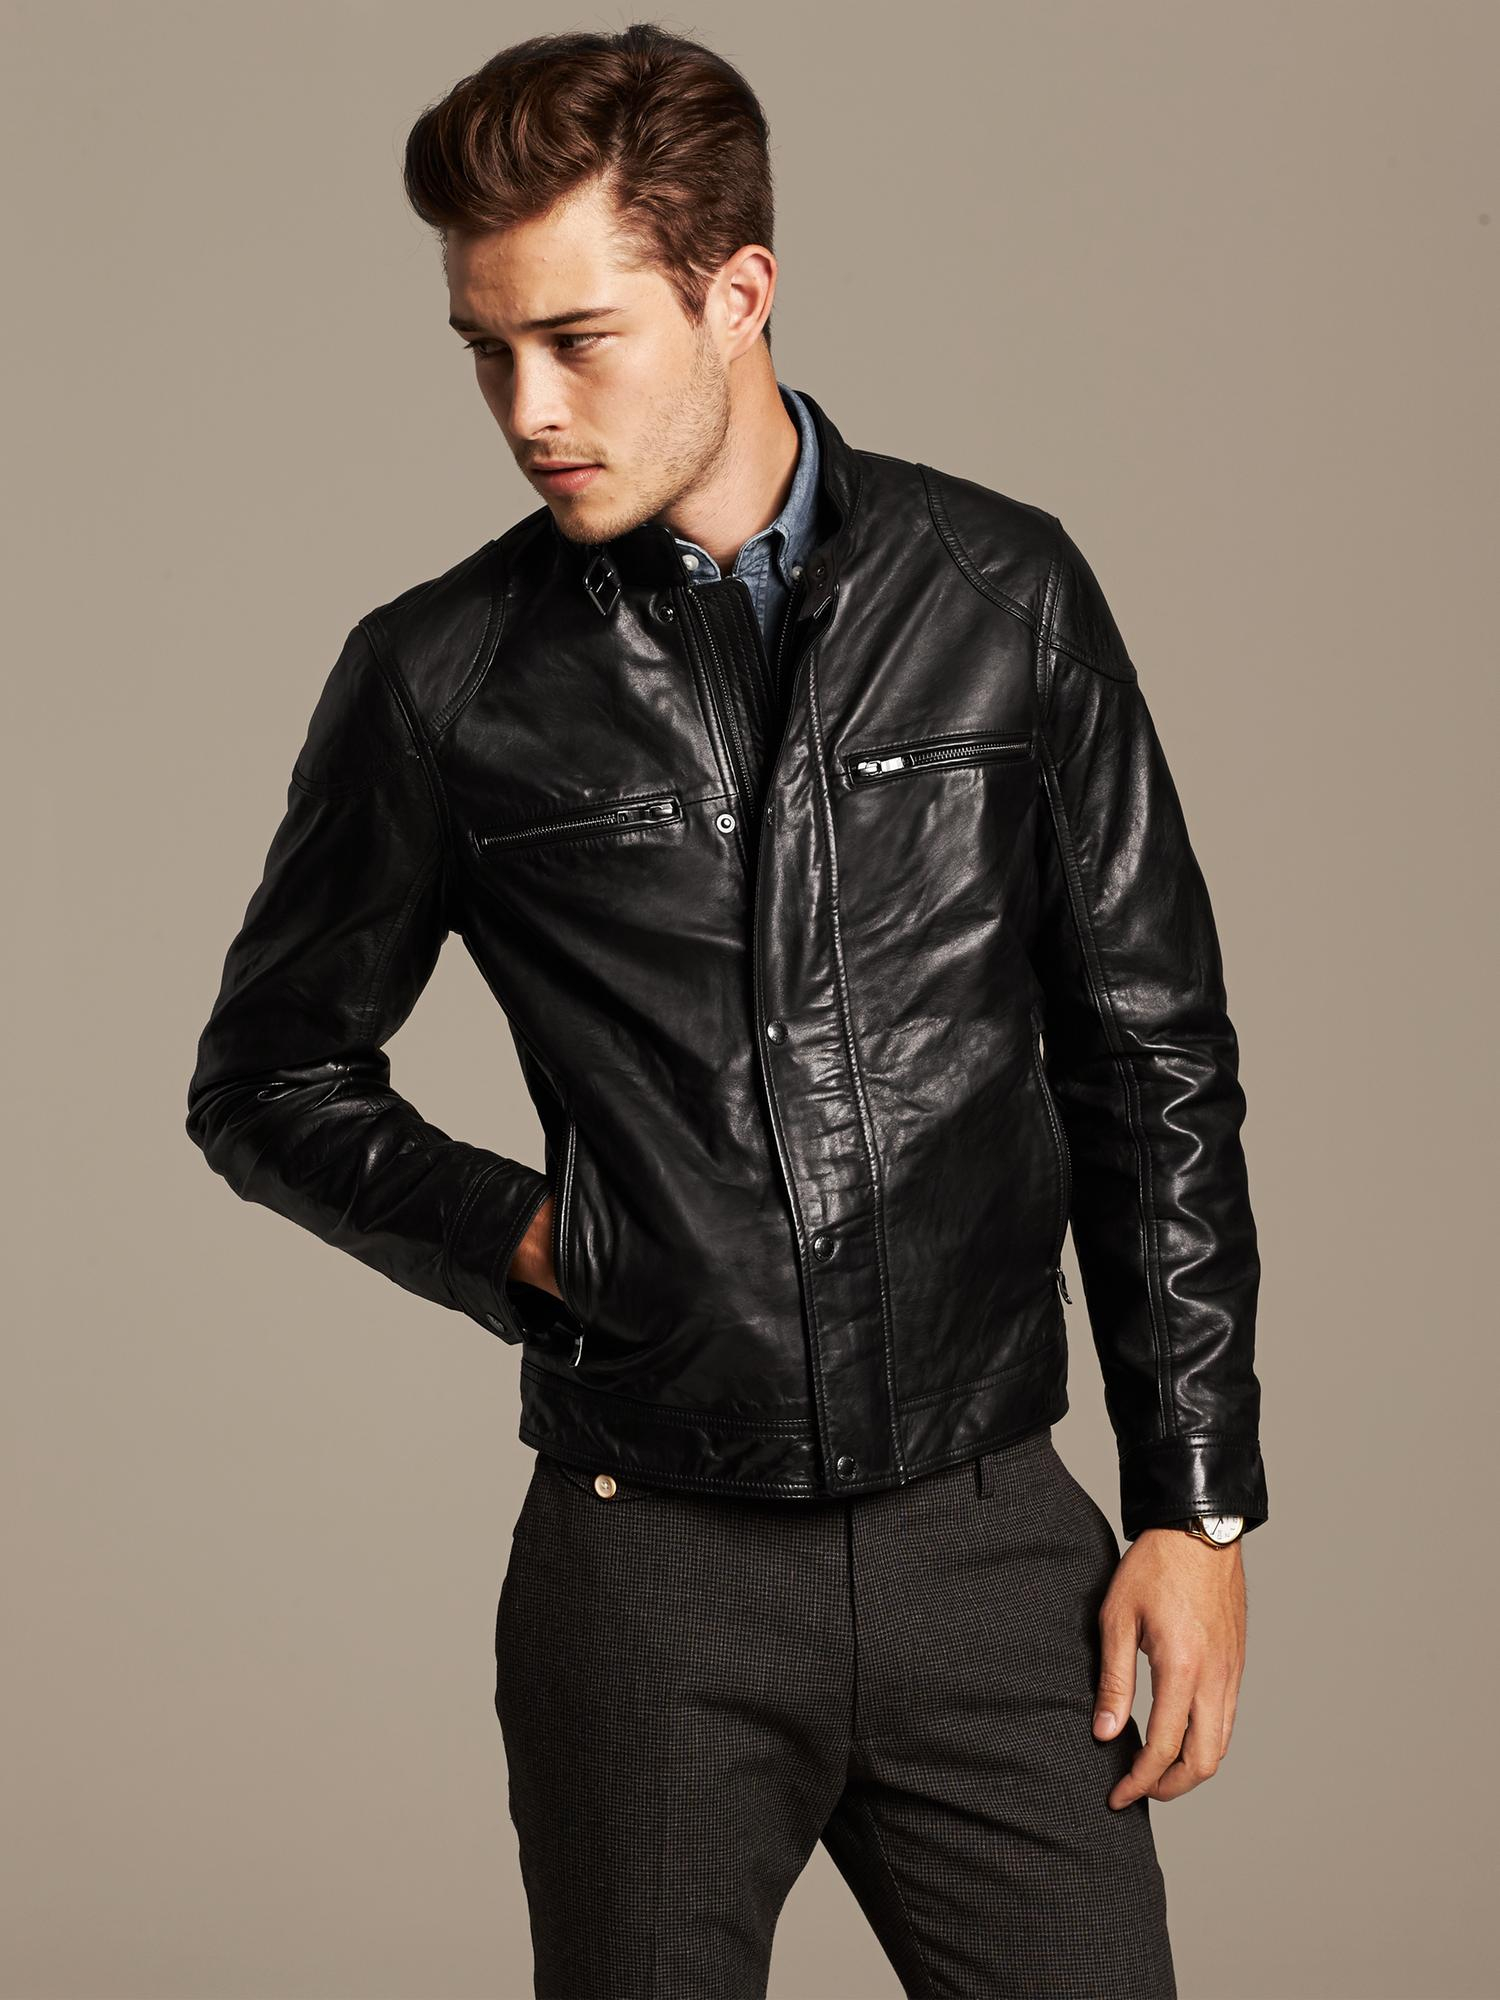 Lyst - Banana Republic Leather Moto Jacket in Black for Men